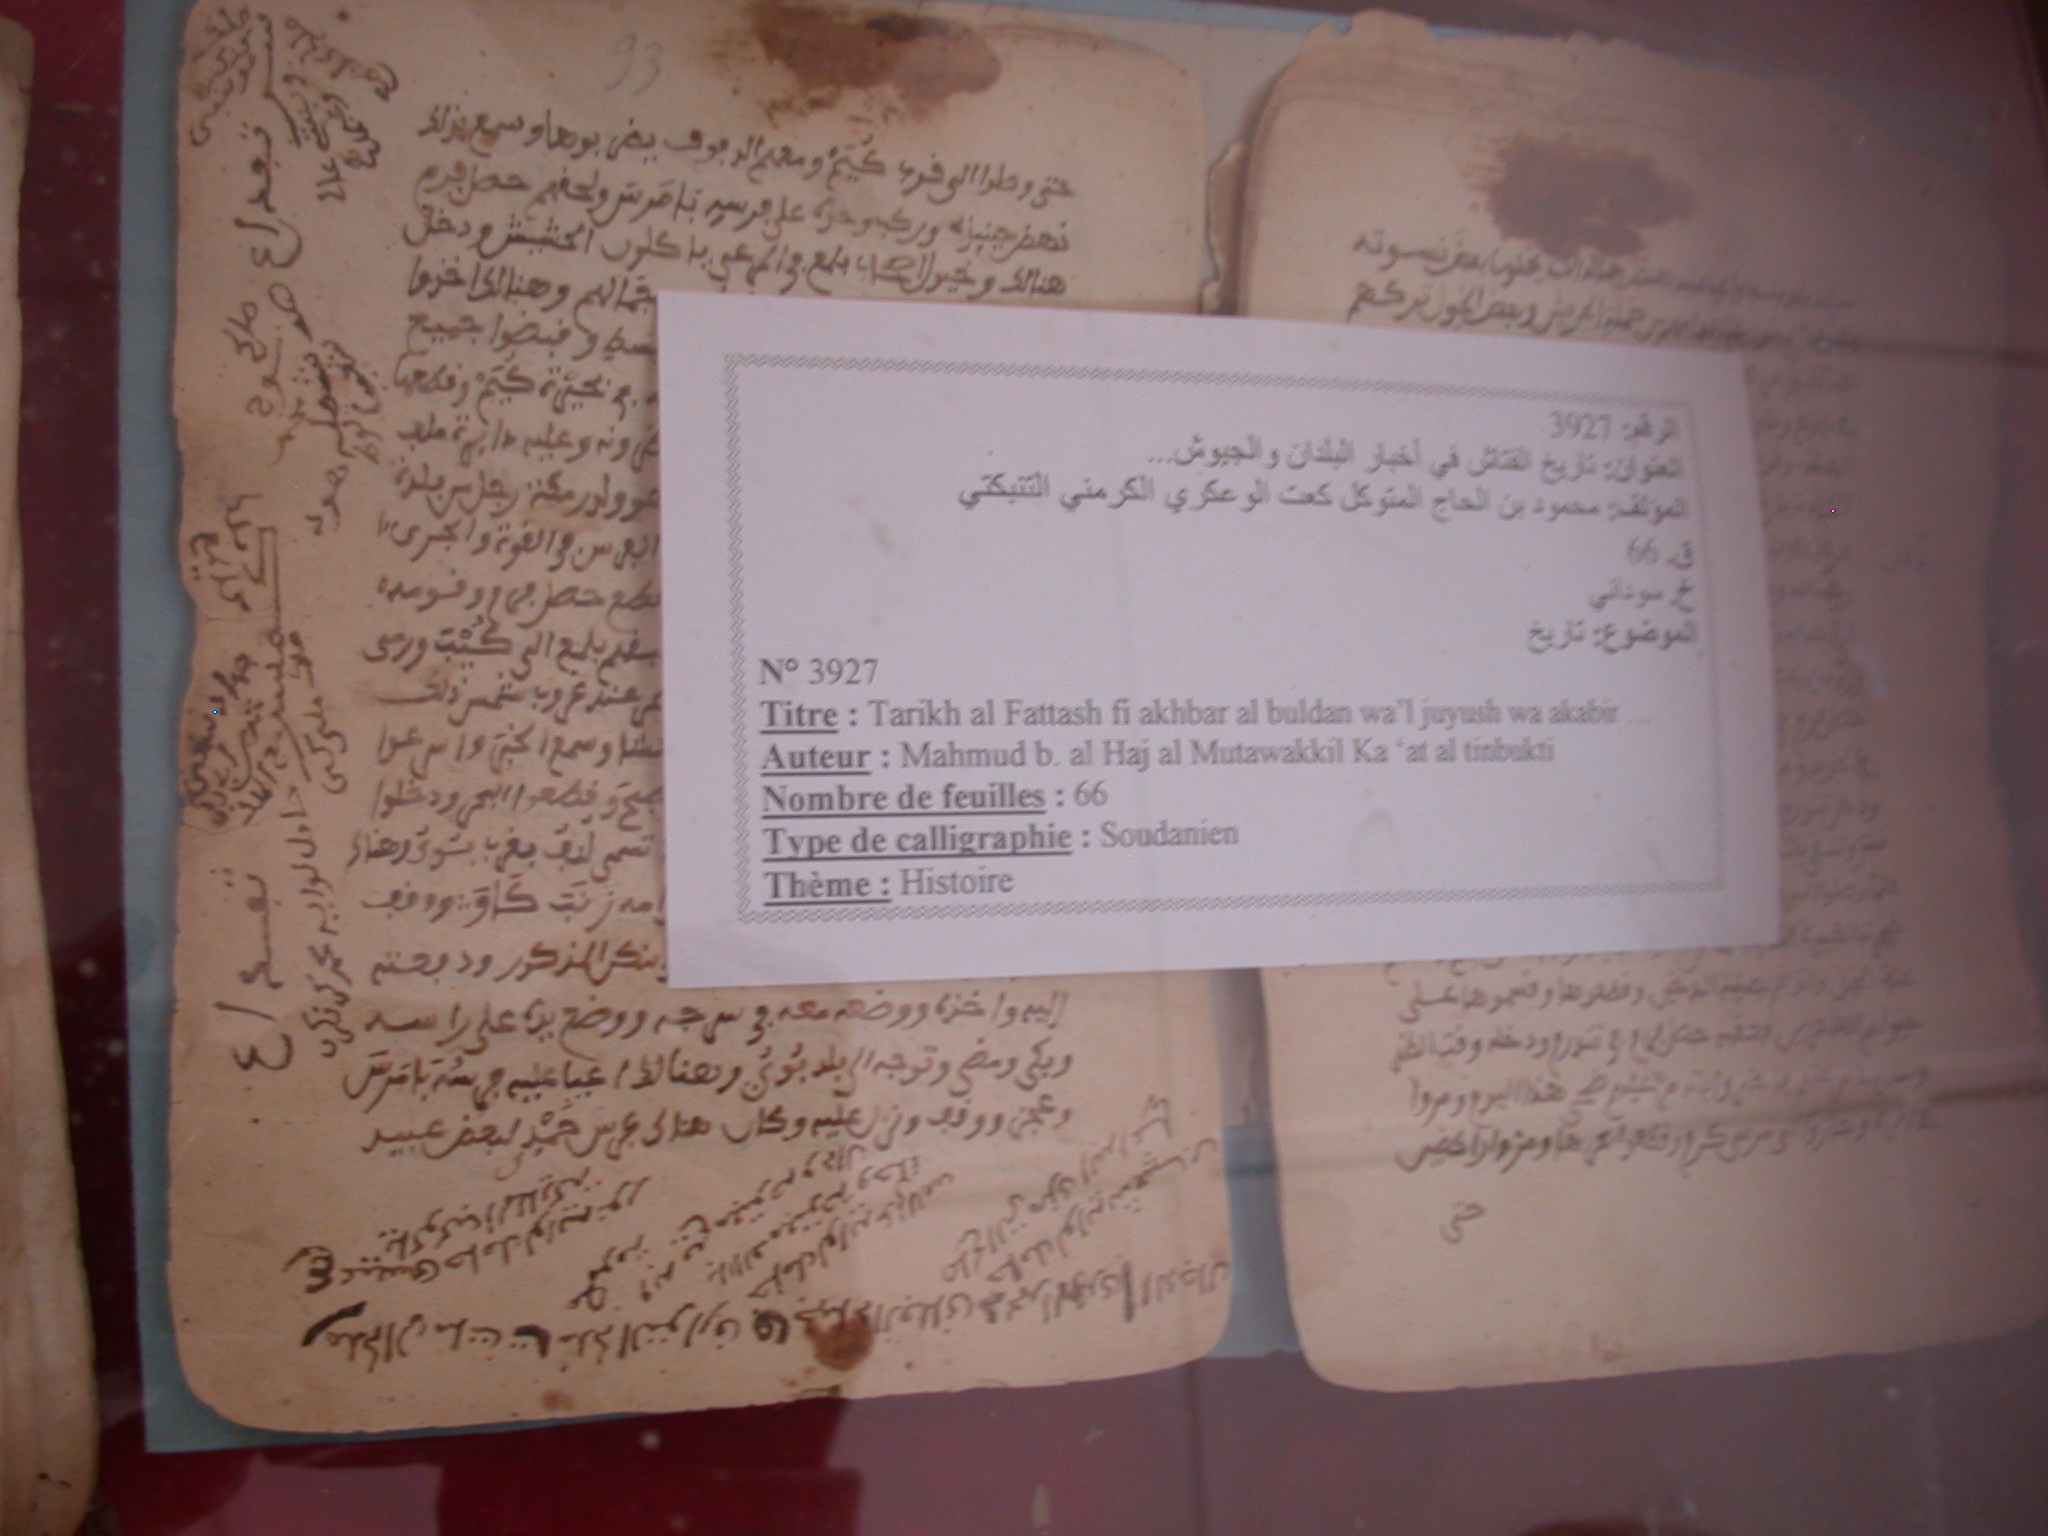 Manuscript, Tarikh al Fattash fi akhbar al buldan wal juyush wa akabir, Ahmed Baba Institute, Institut des Hautes Etudes et de Recherches Islamiques, Timbuktu, Mali